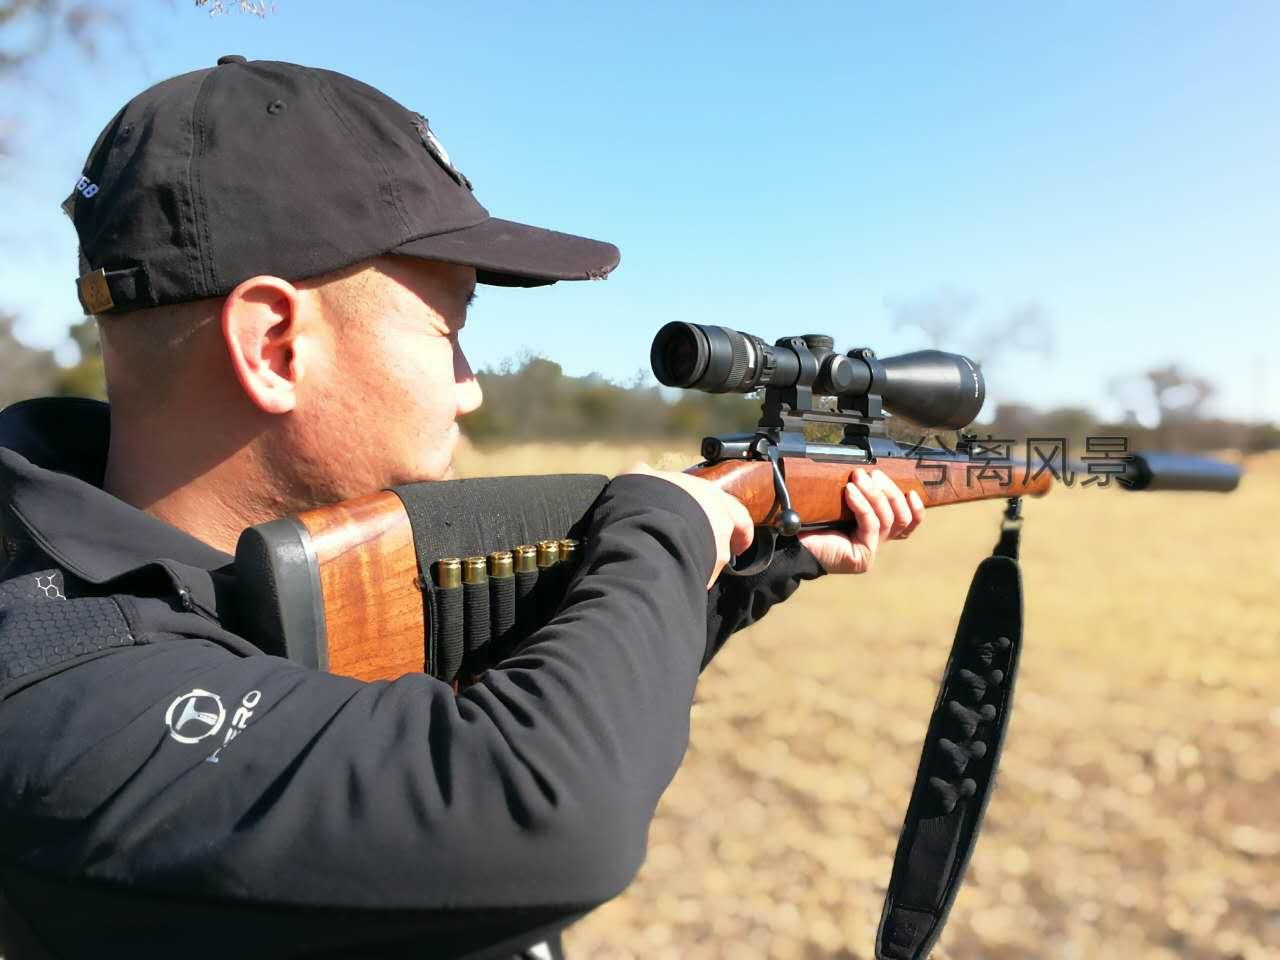 Limited Edition Hunting Rifle集精致优雅于一身 - 普象网